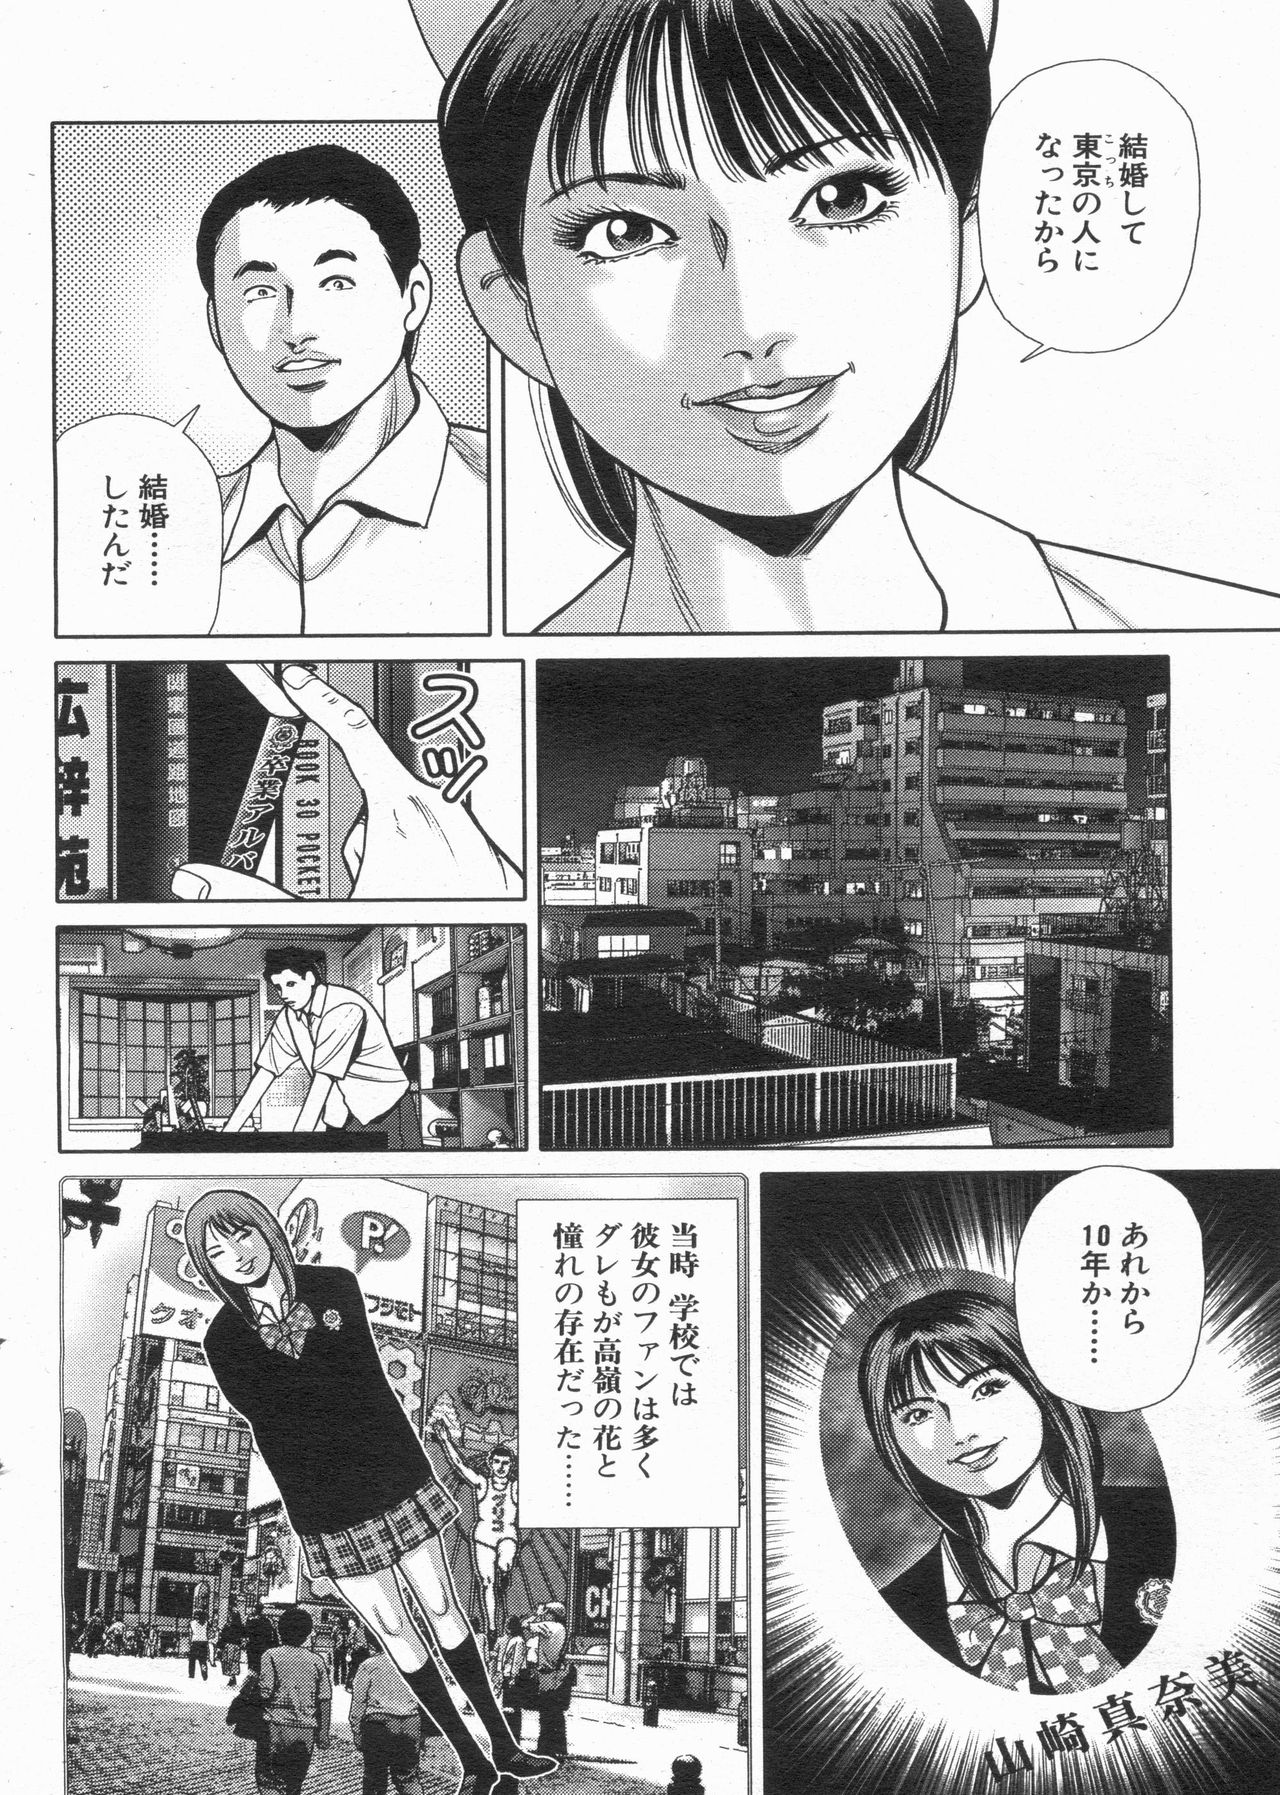 Manga Bon 2013-04 漫画ボン 2013年4月号